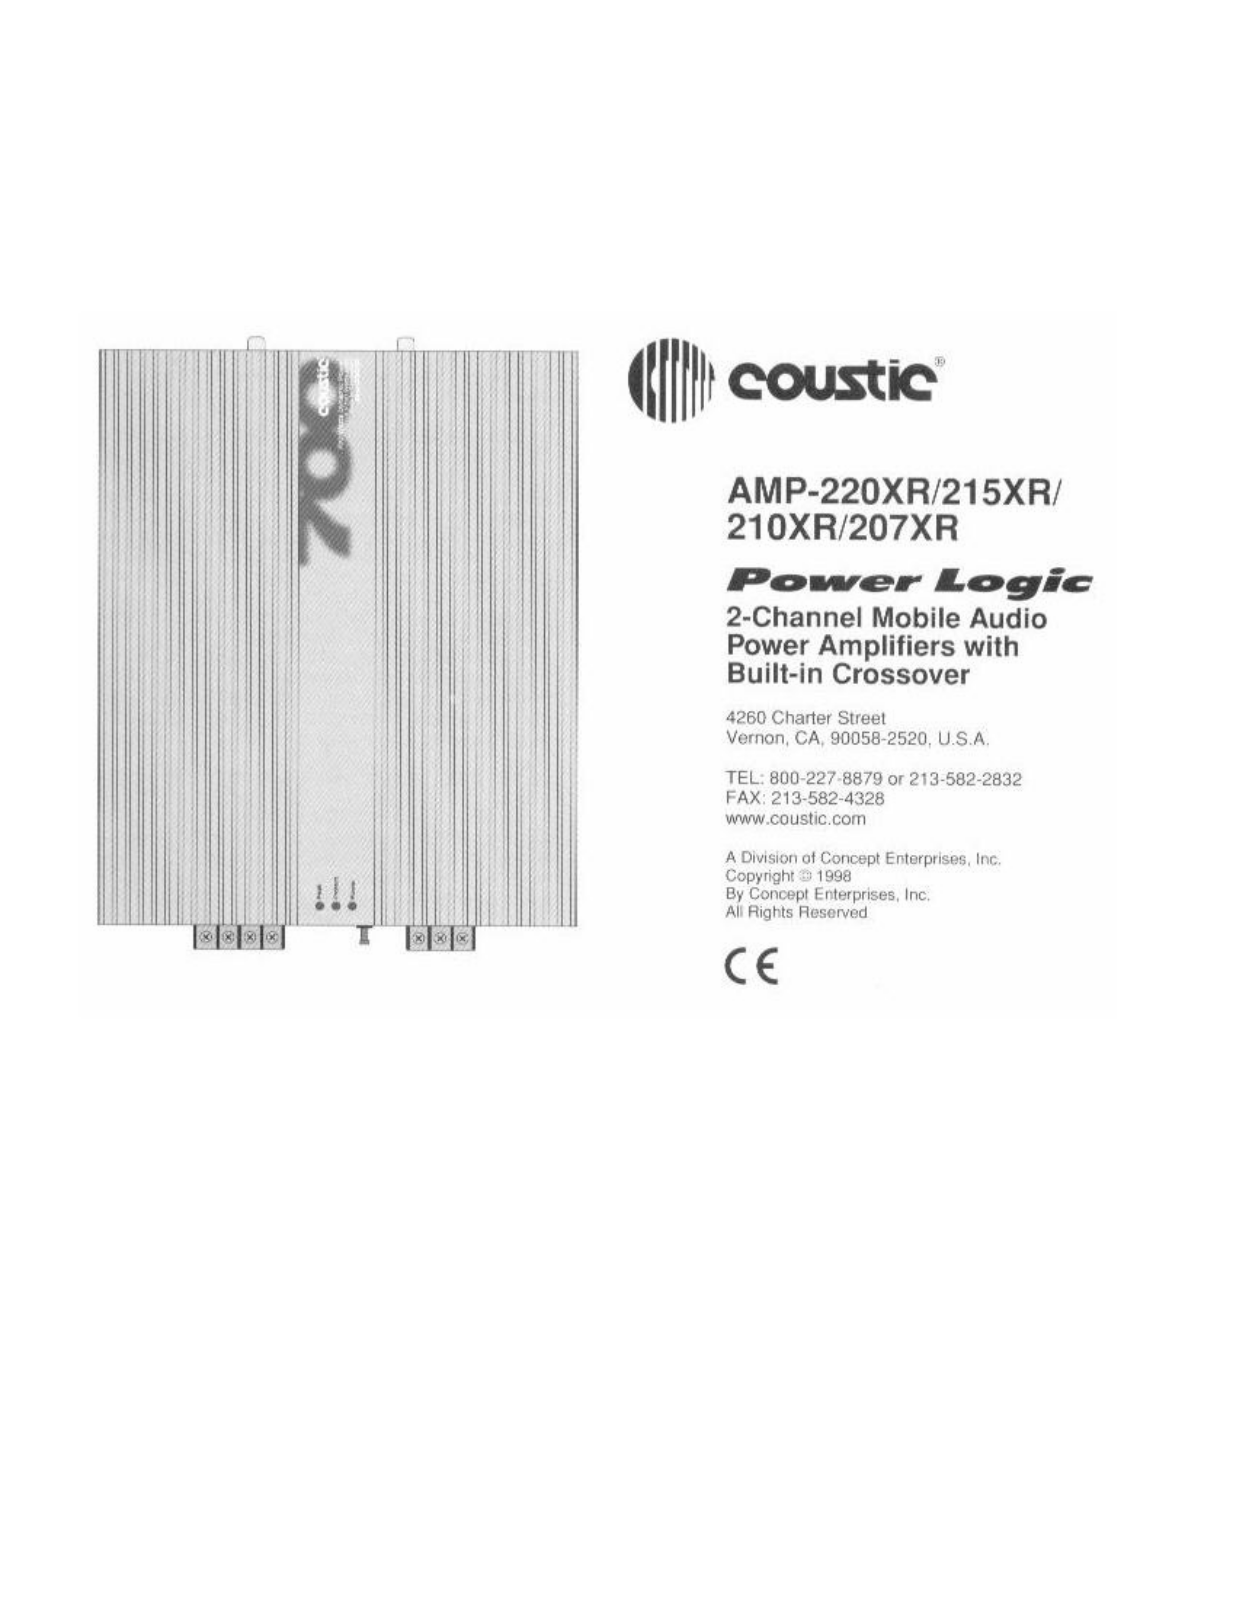 Coustic AMP-220XR, AMP215XR, AMP-210XR, AMP-207XR Instruction Manual